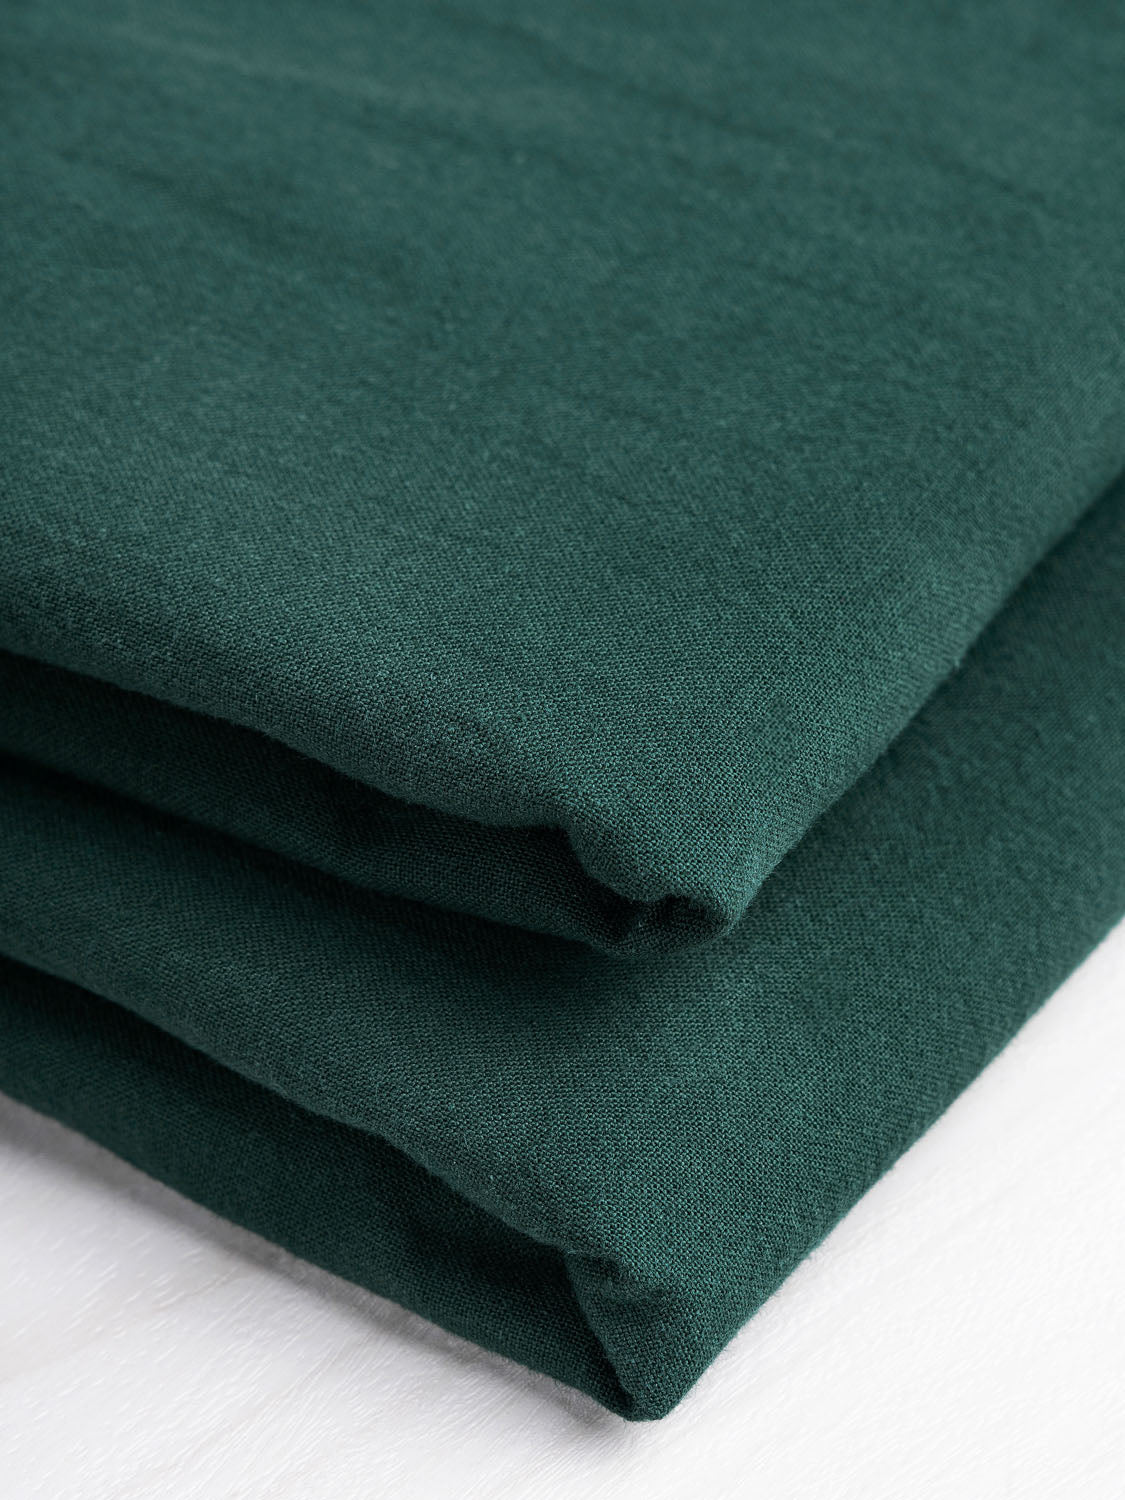 Tumbled Non-Stretch Cotton - Forest | Core Fabrics